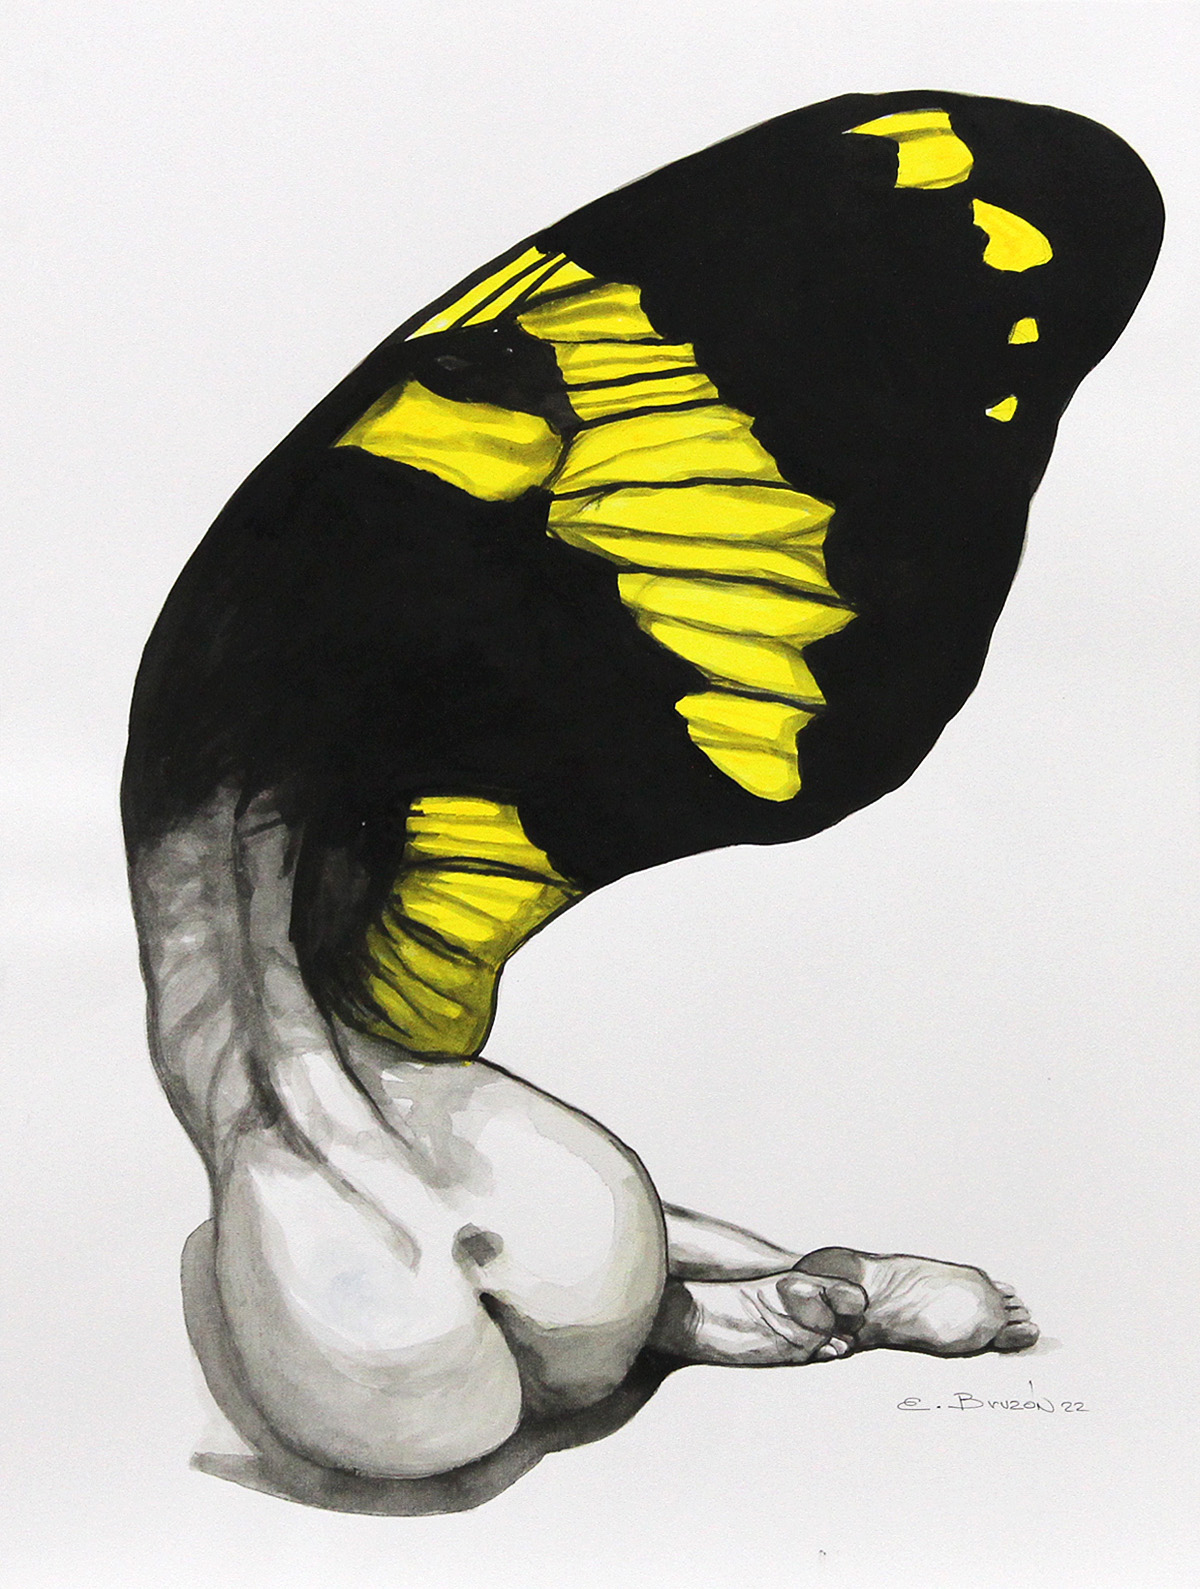 Originales Acrylbild: Der Schmetterling, E. Bruzon, Acrylmalerei auf Karton (Unikat)